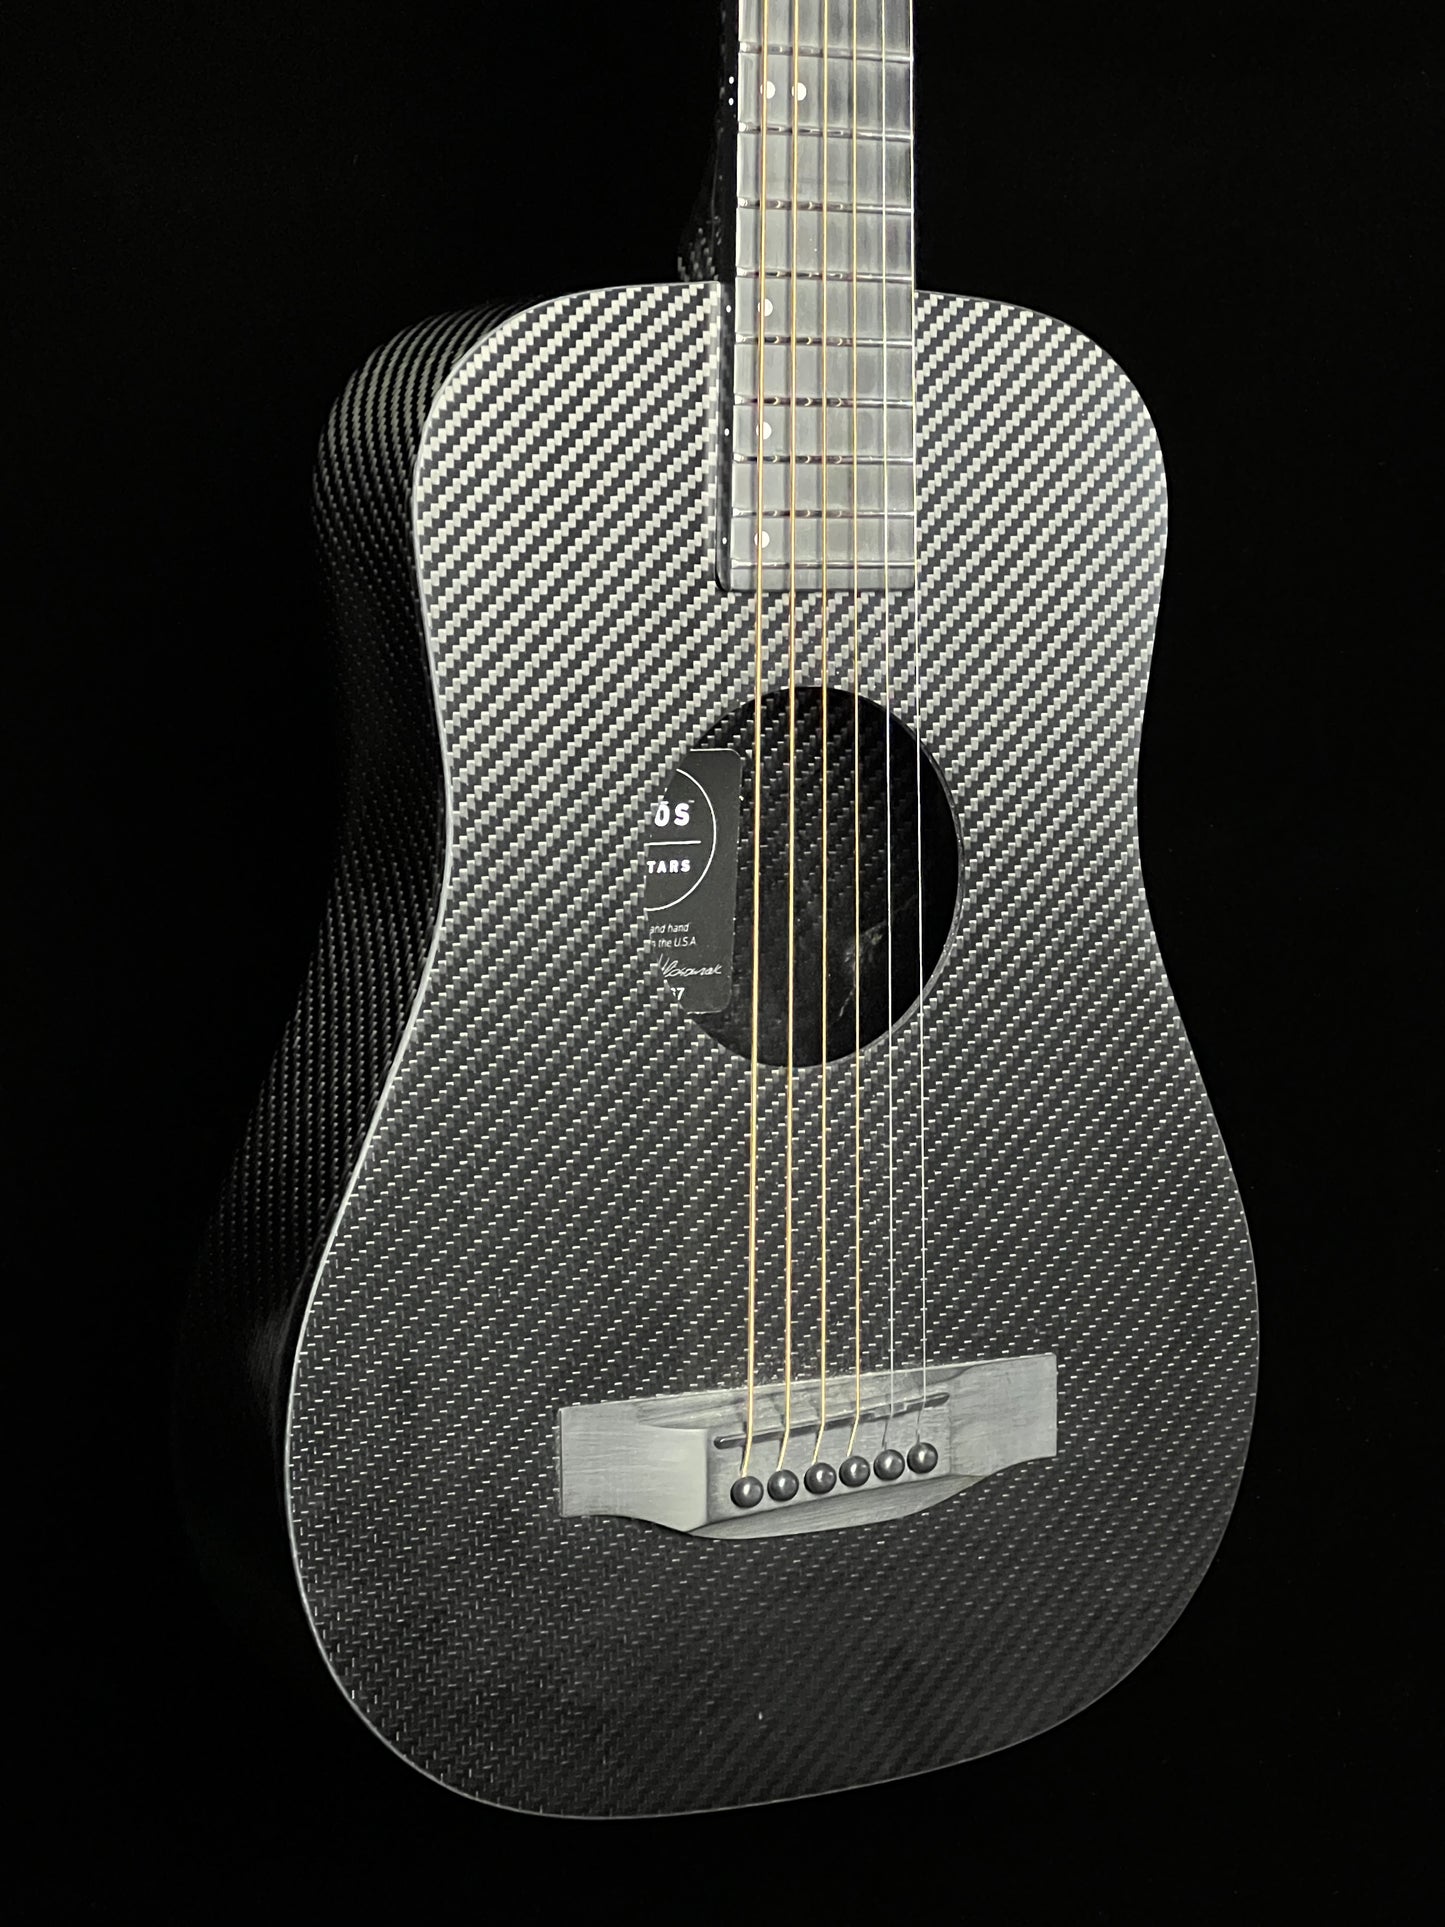 SOLD - KLOS Carbon Fiber Travel Guitar - New